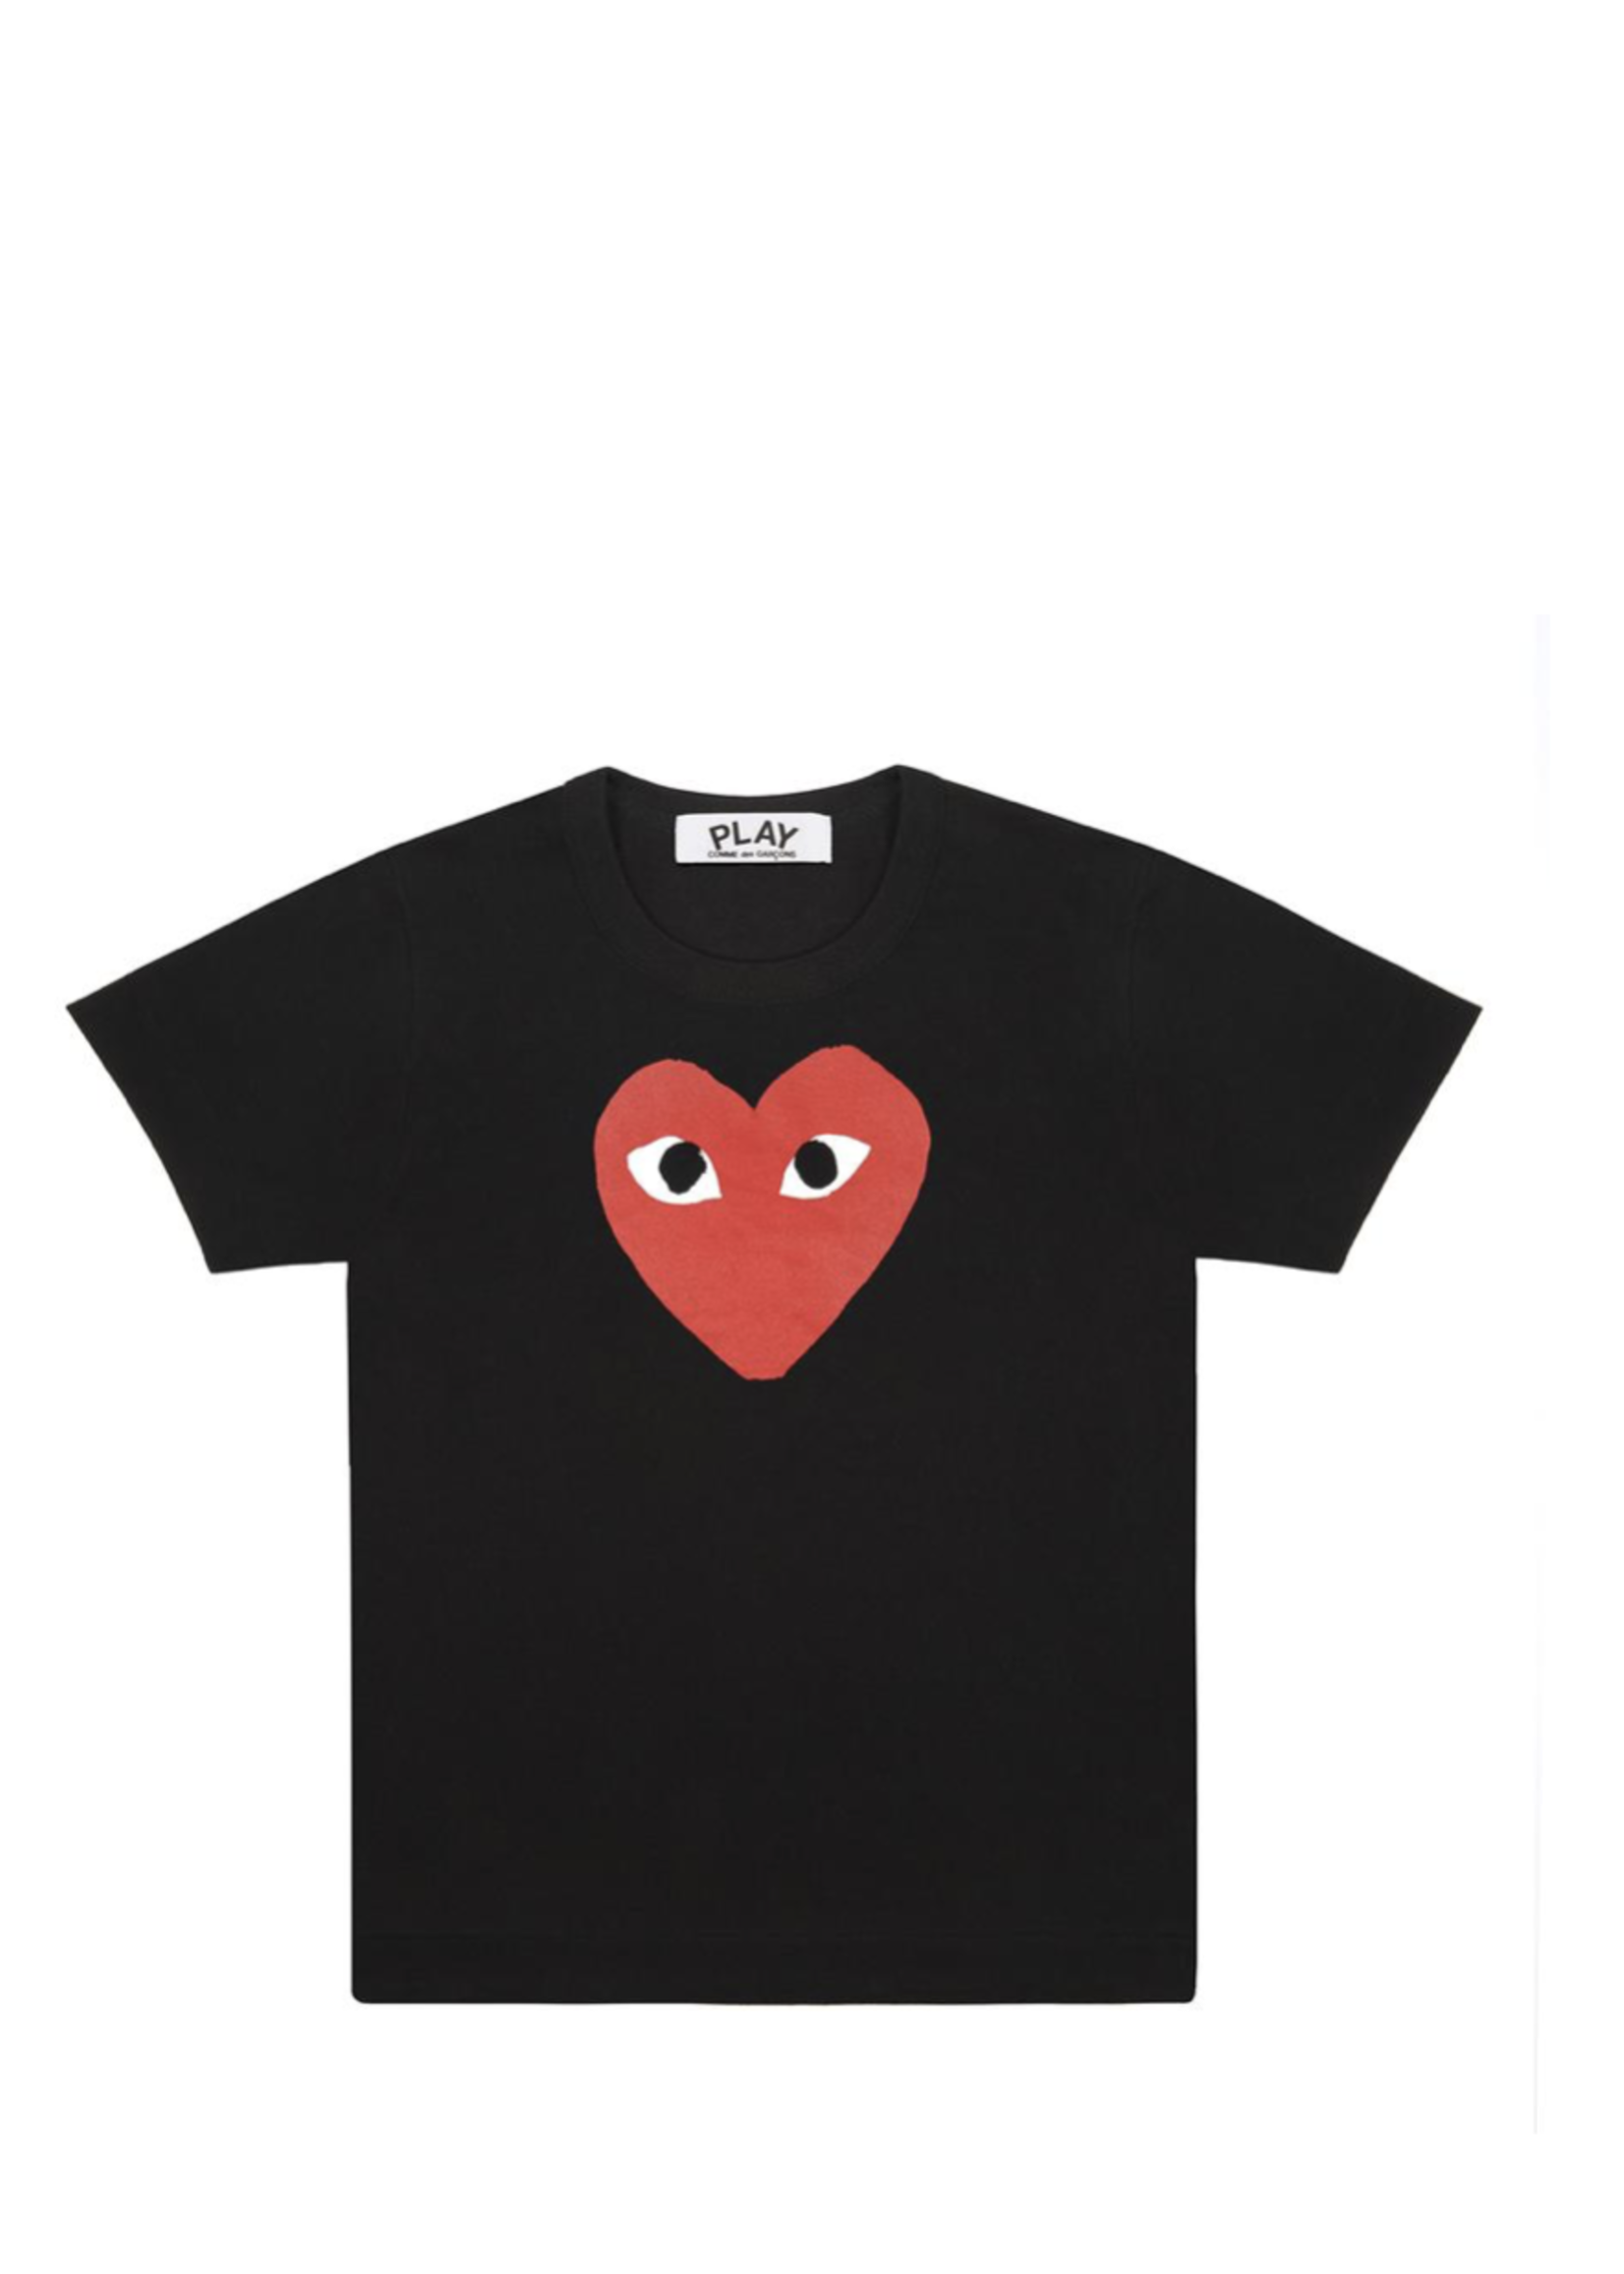 COMME des GARÇONS PLAY Big Red Heart Logo T-shirt on Black